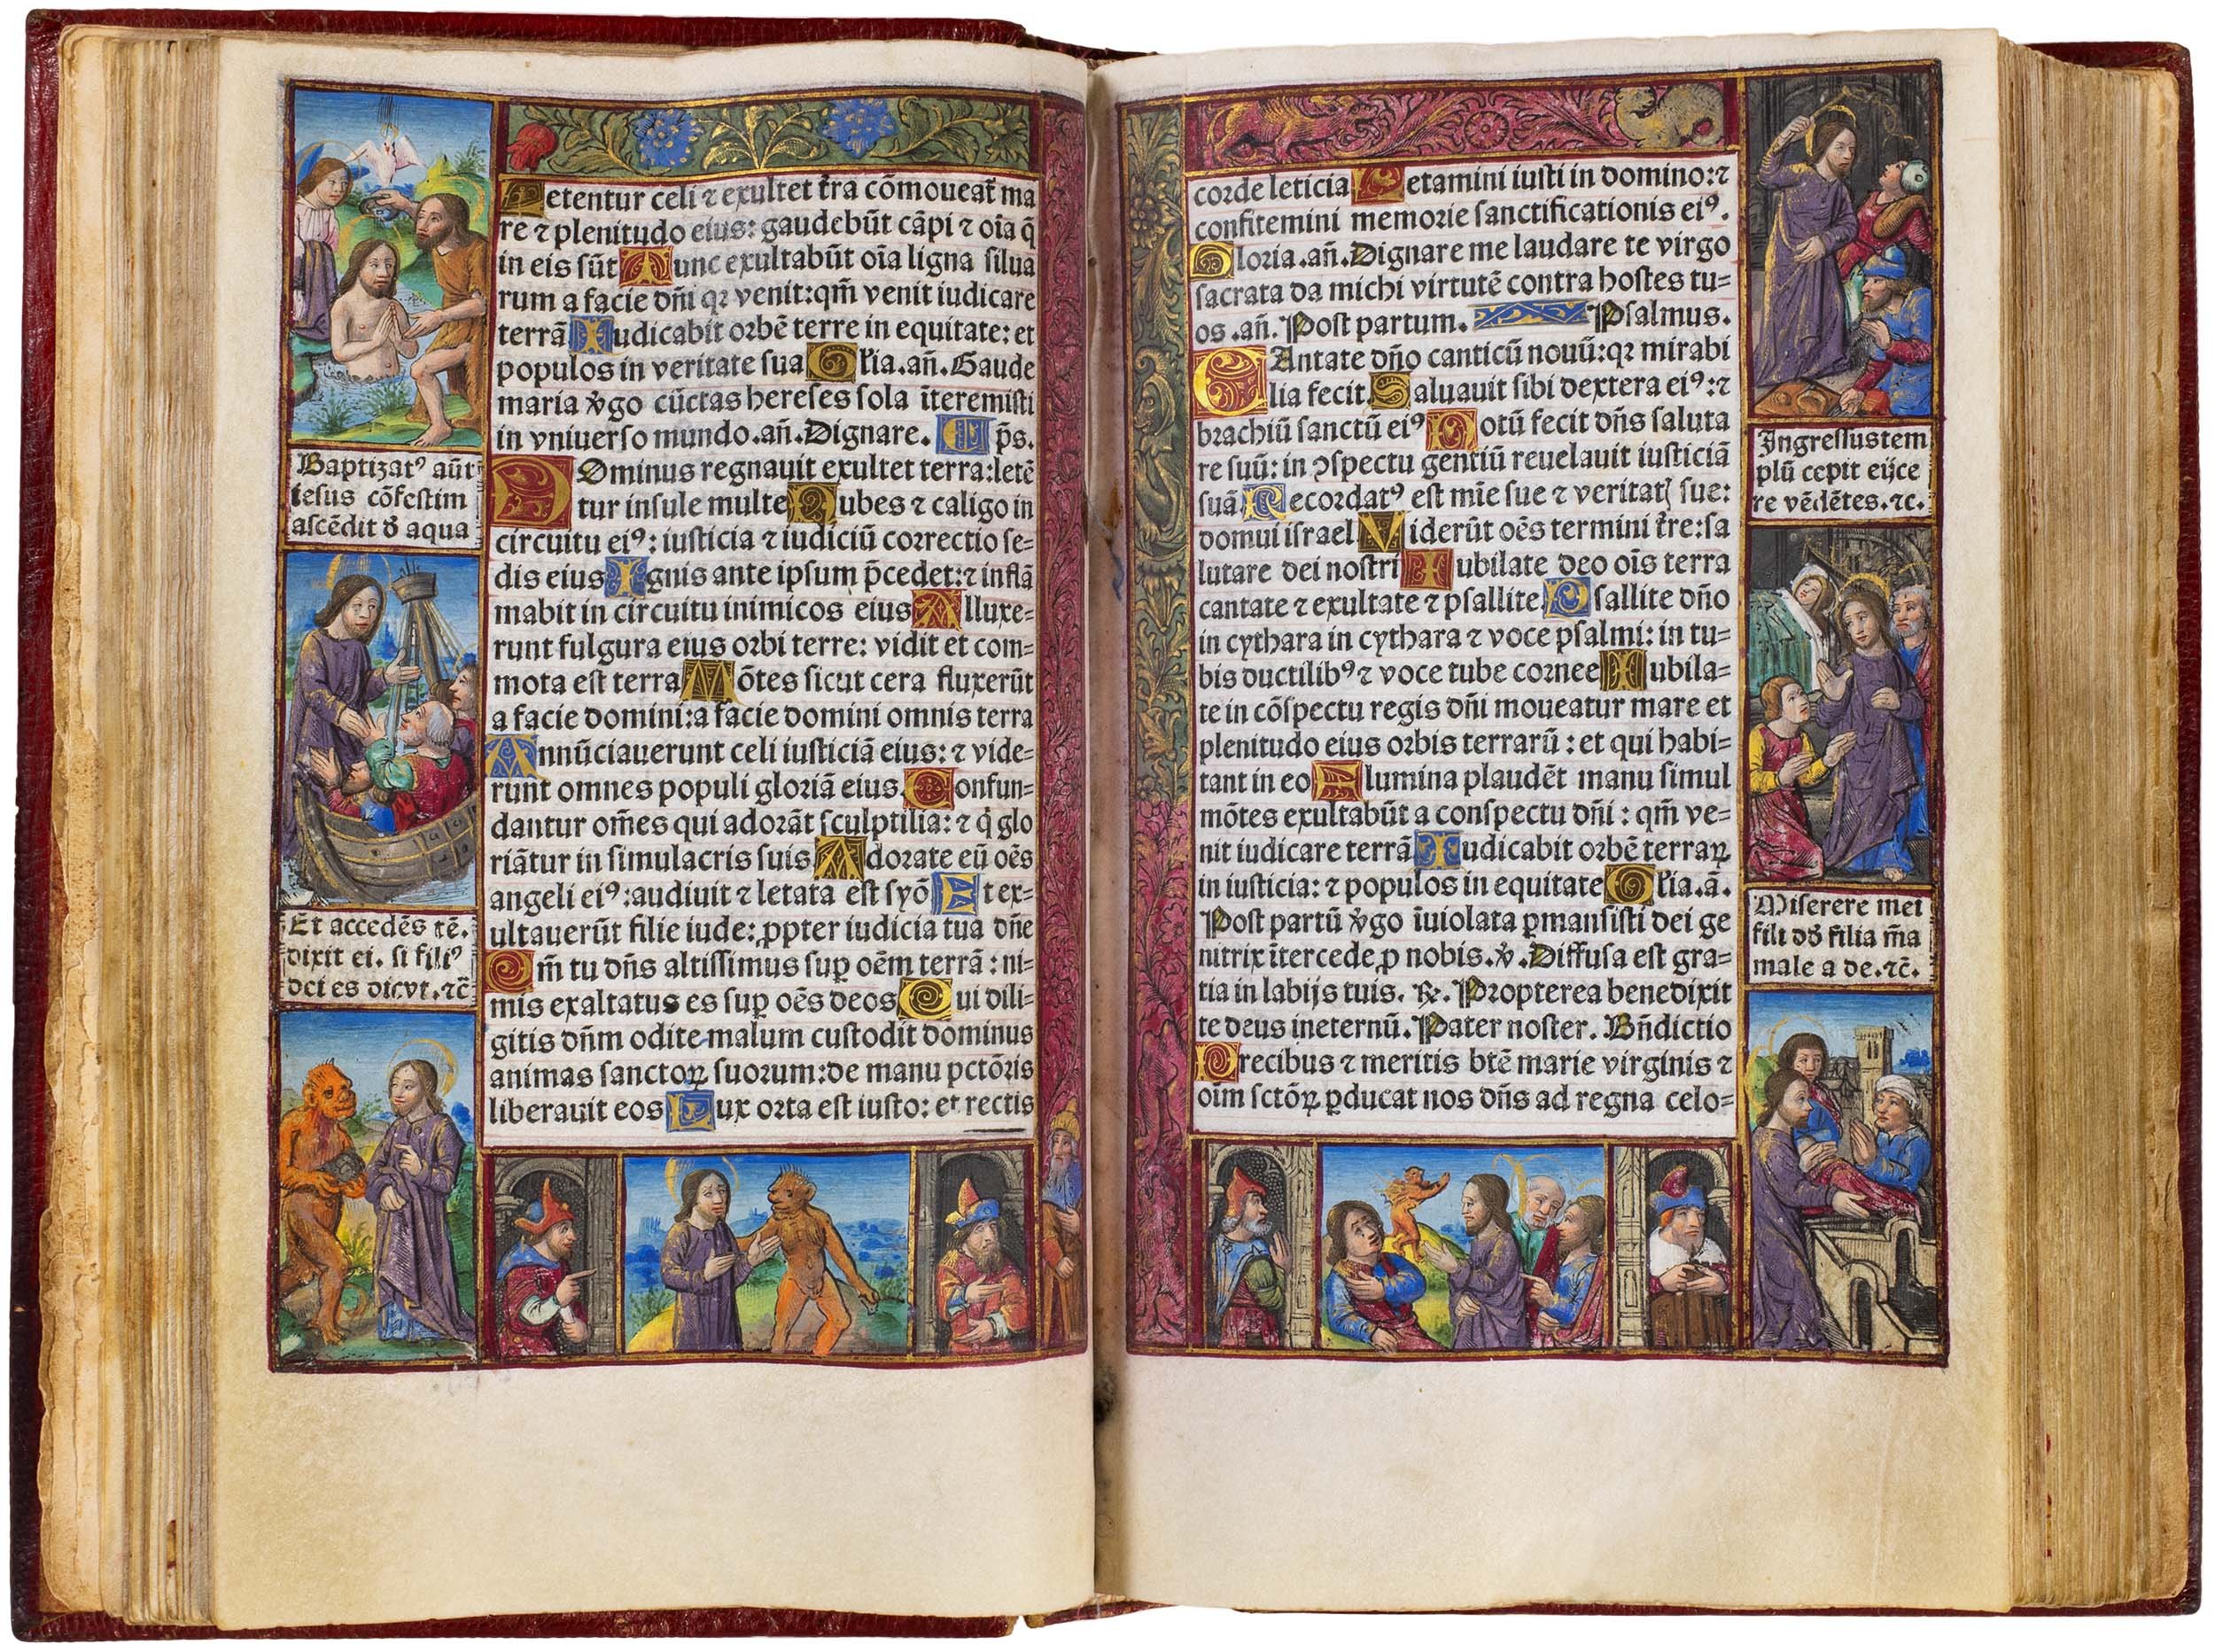 Horae-bmv-book-of-hours-Louis-XII-martainville-master-philippa-guelders-paris-pigouchet-vostre-15.10.1499-25.jpg